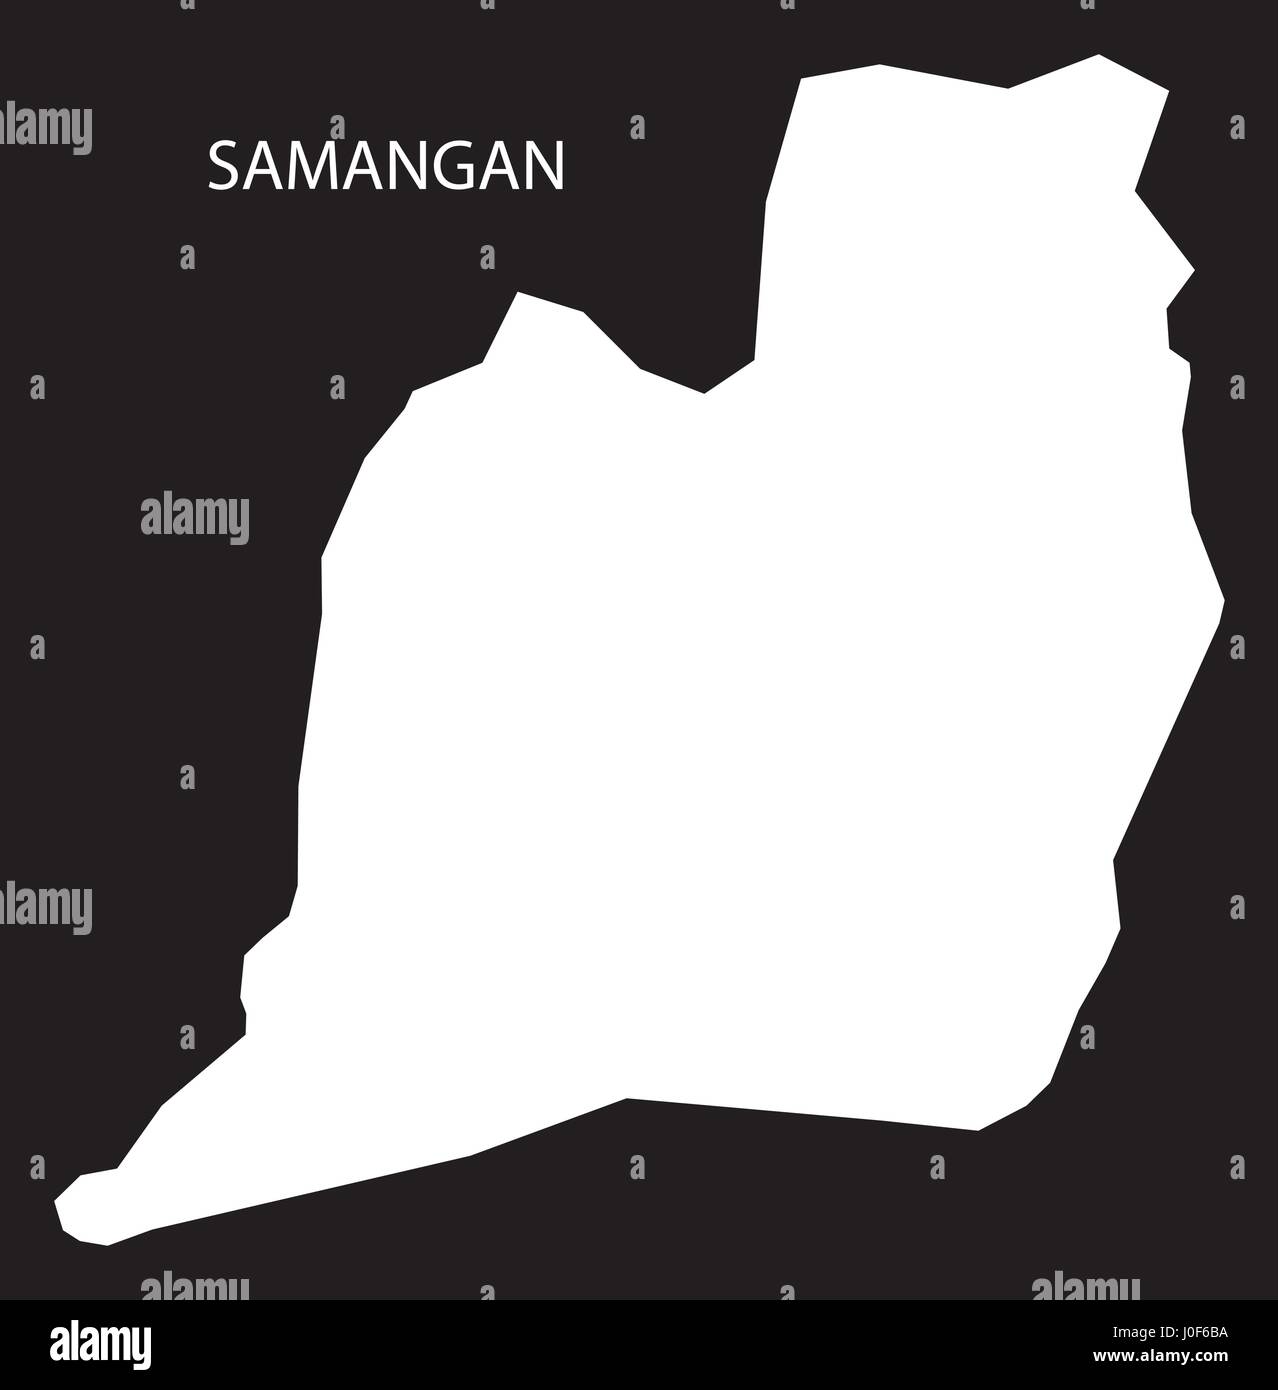 Samangan Afghanistan map black inverted silhouette illustration Stock Vector